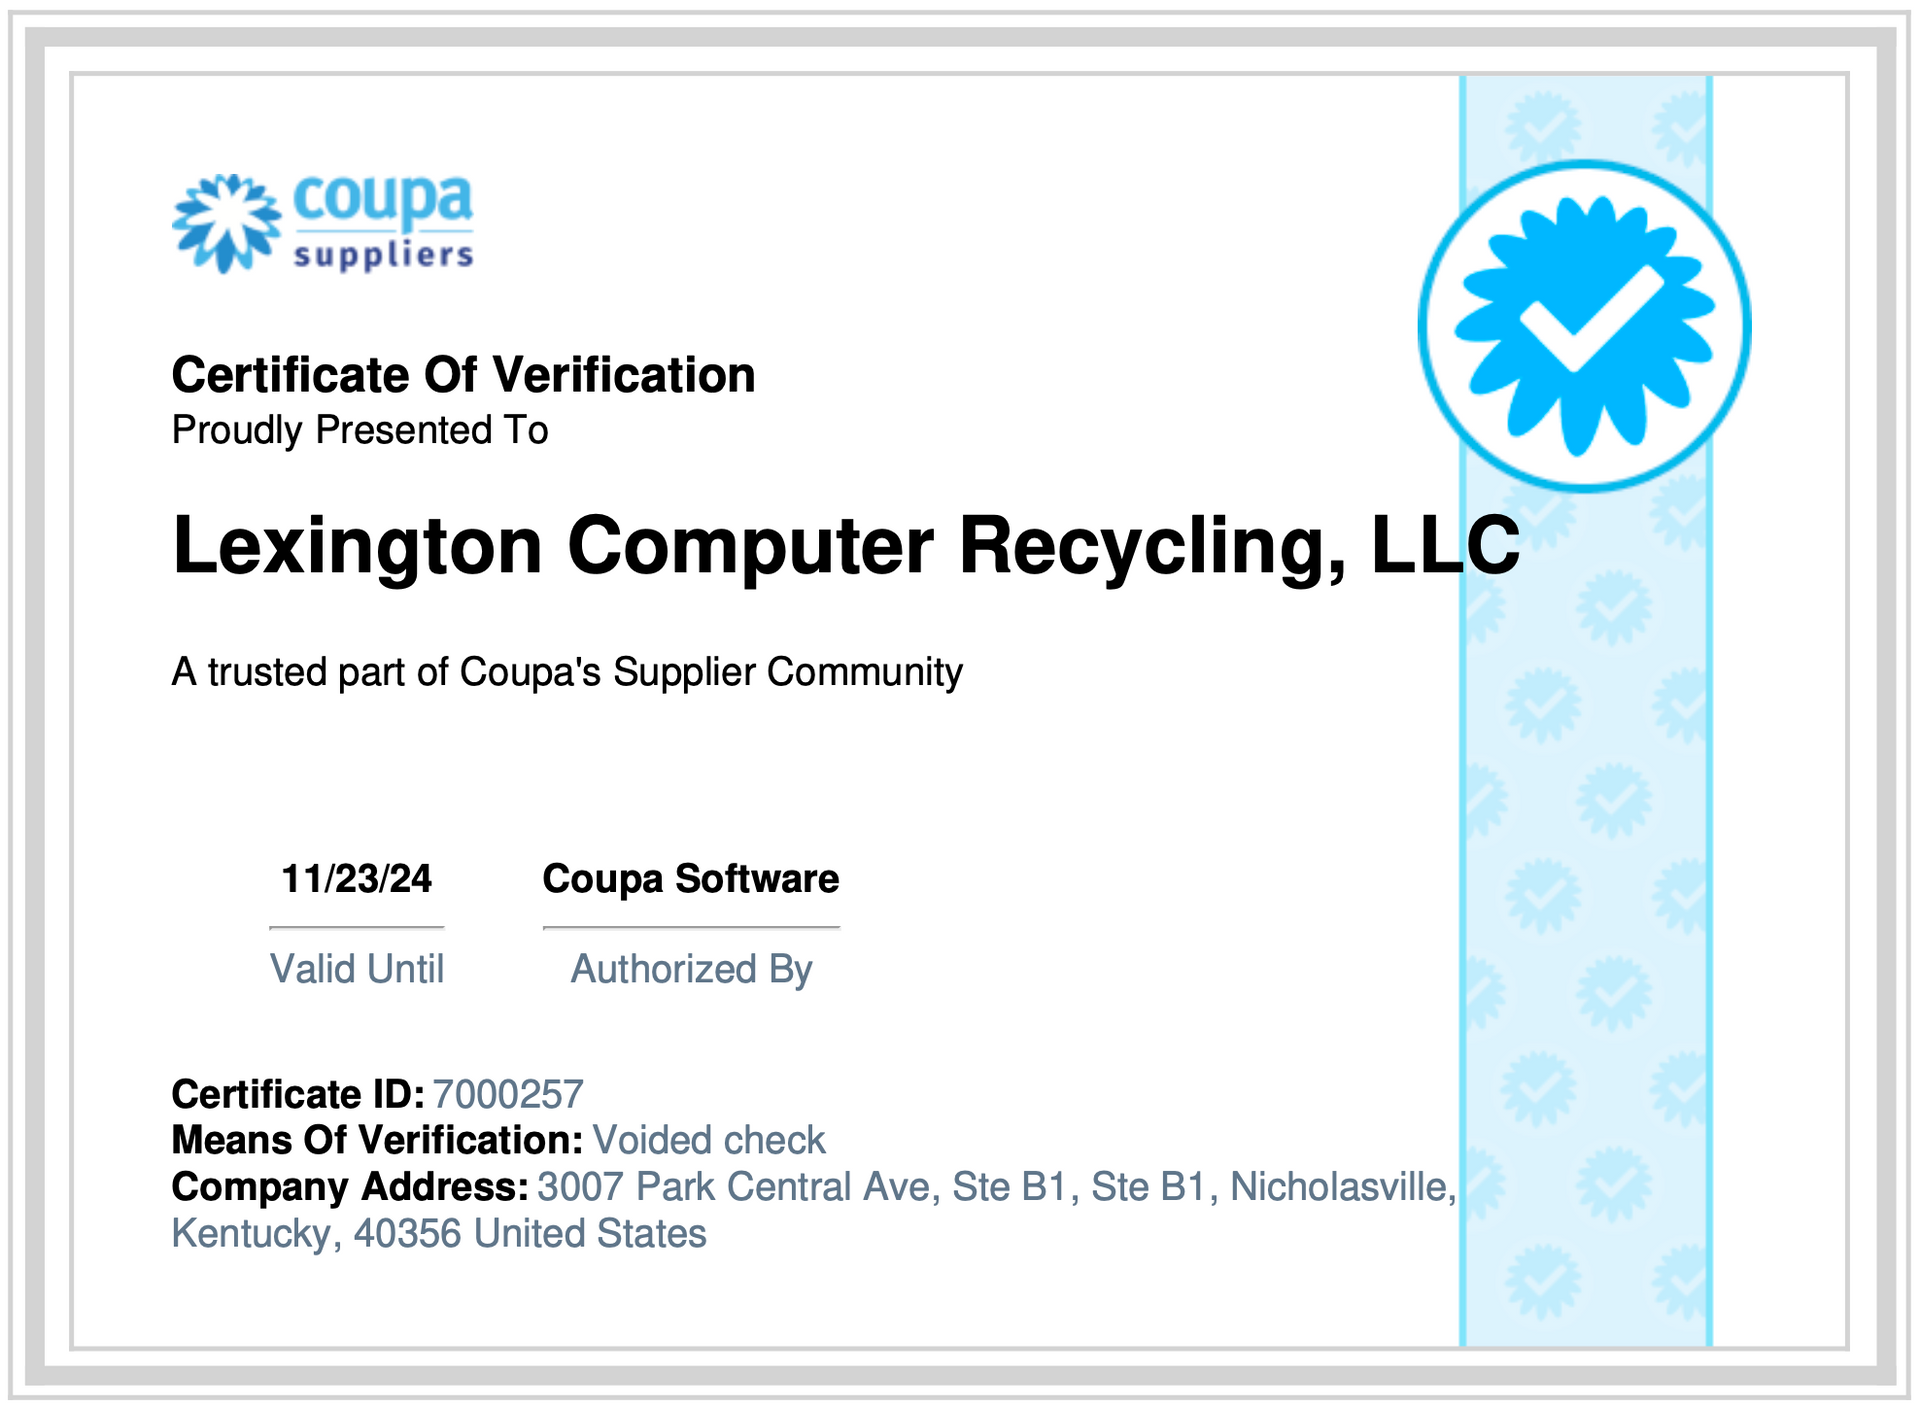 Coupa Suppliers Certificate of Verification, coupa verified computer recycling, coupa electronics recycling supplier, Nicholasville, Kentucky (KY)